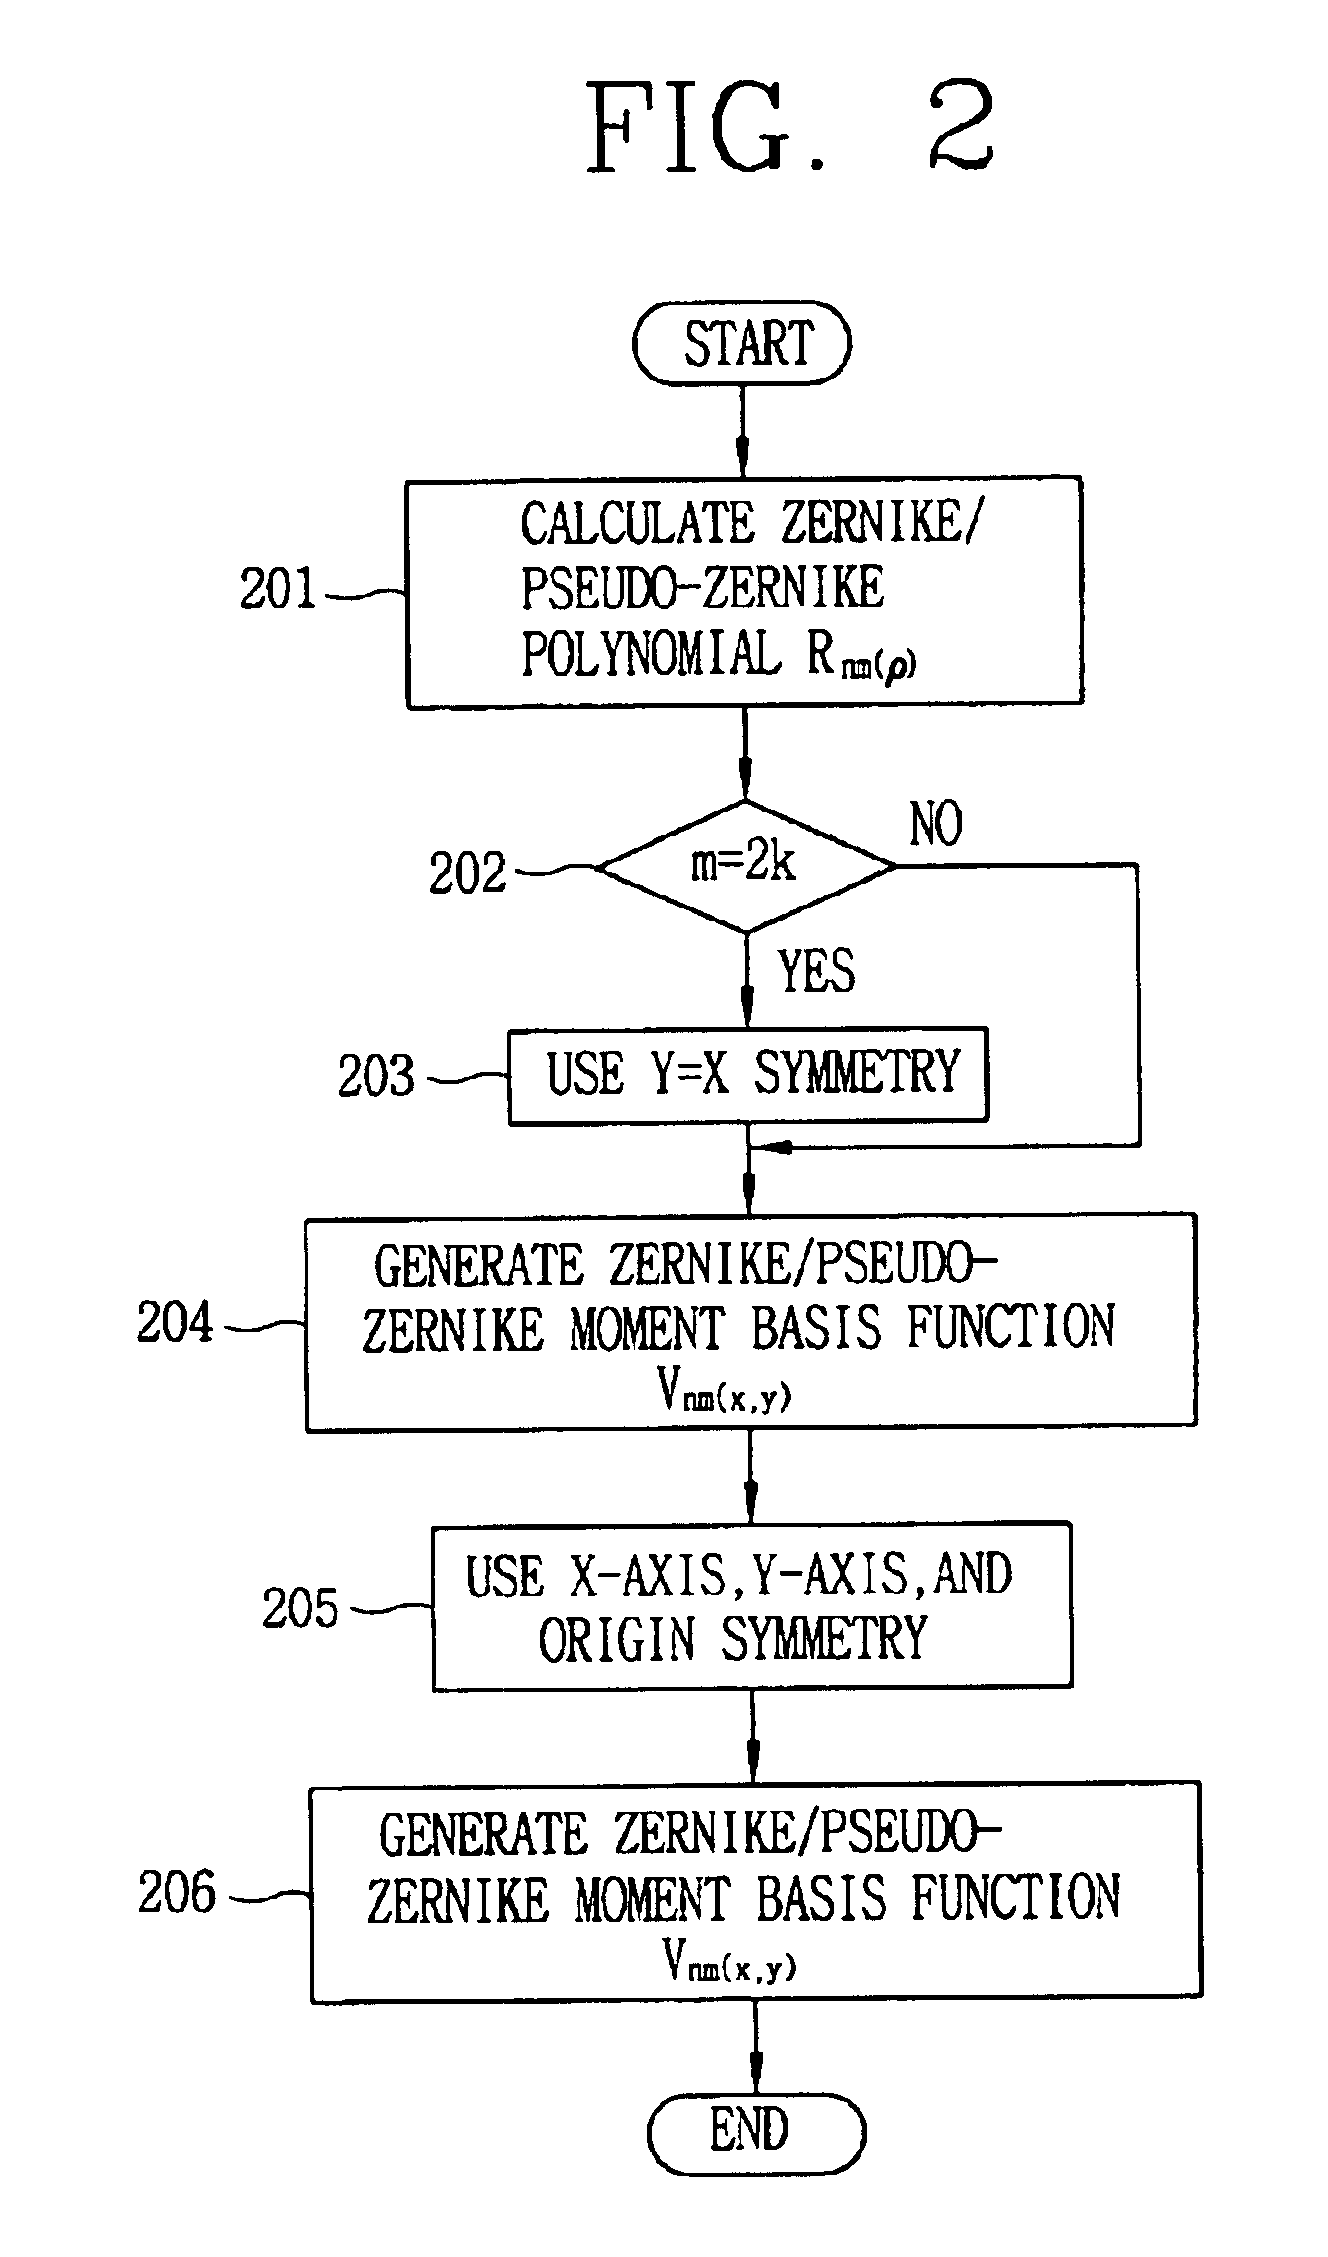 Method for extracting Zernike/Pseudo-Zernike moment